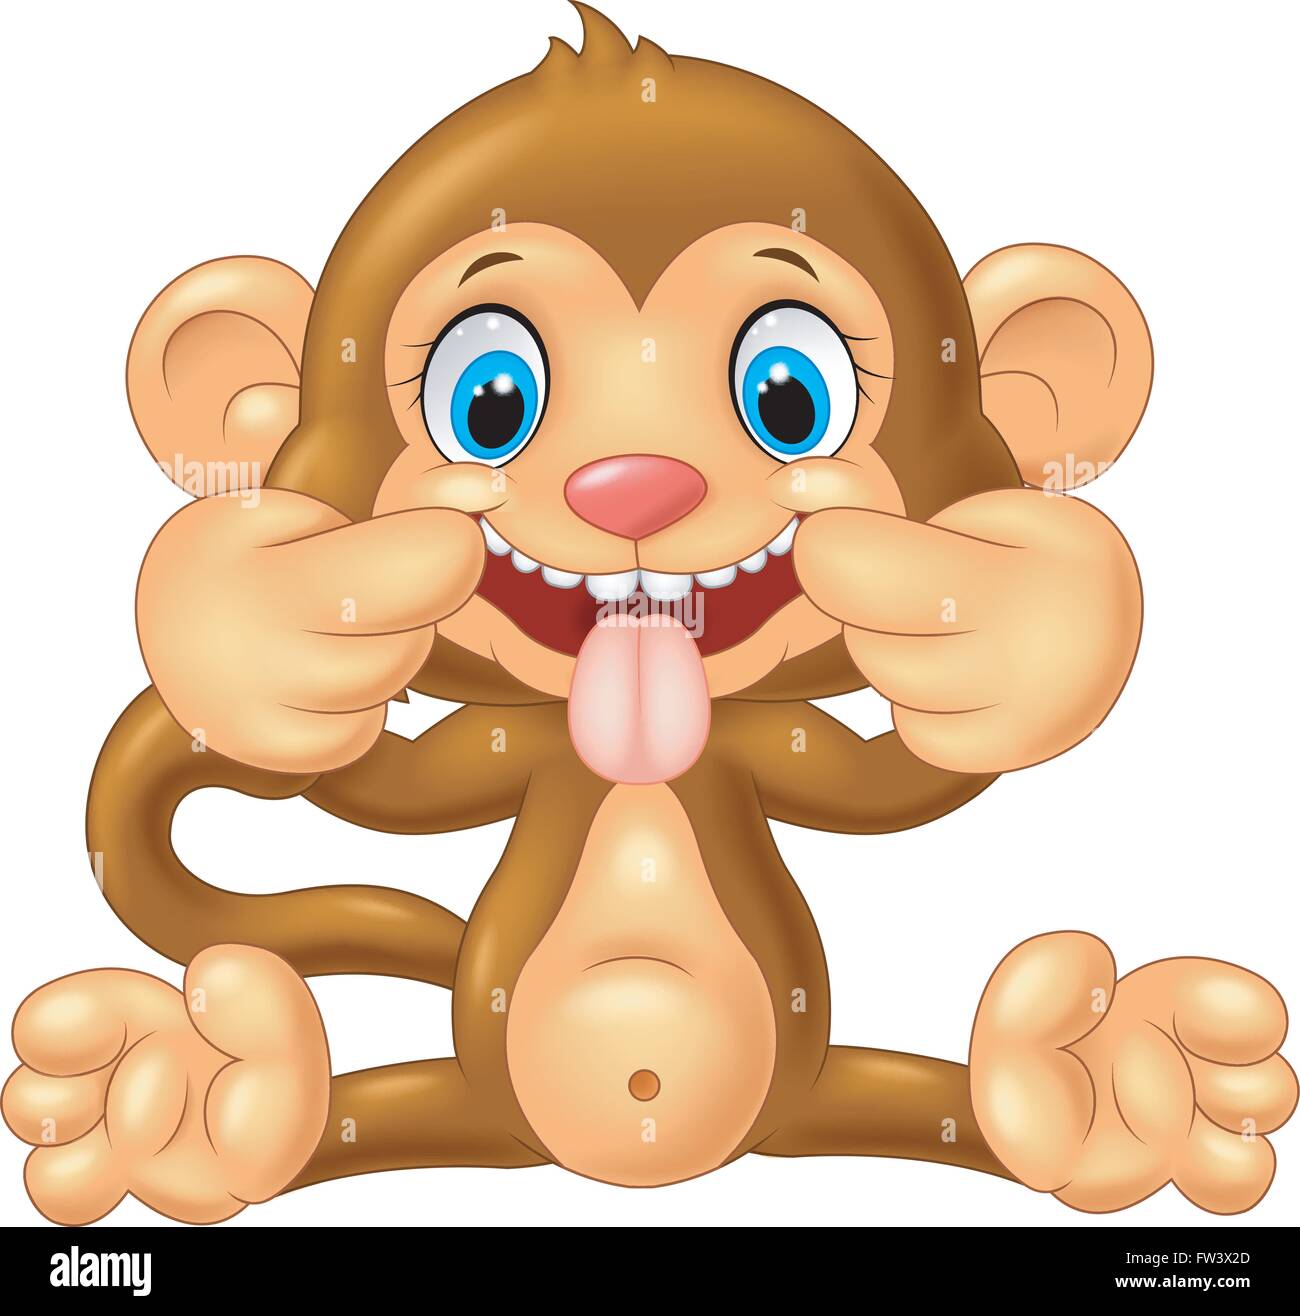 Cartoon monkey making a teasing face. vector illustration Stock Vector